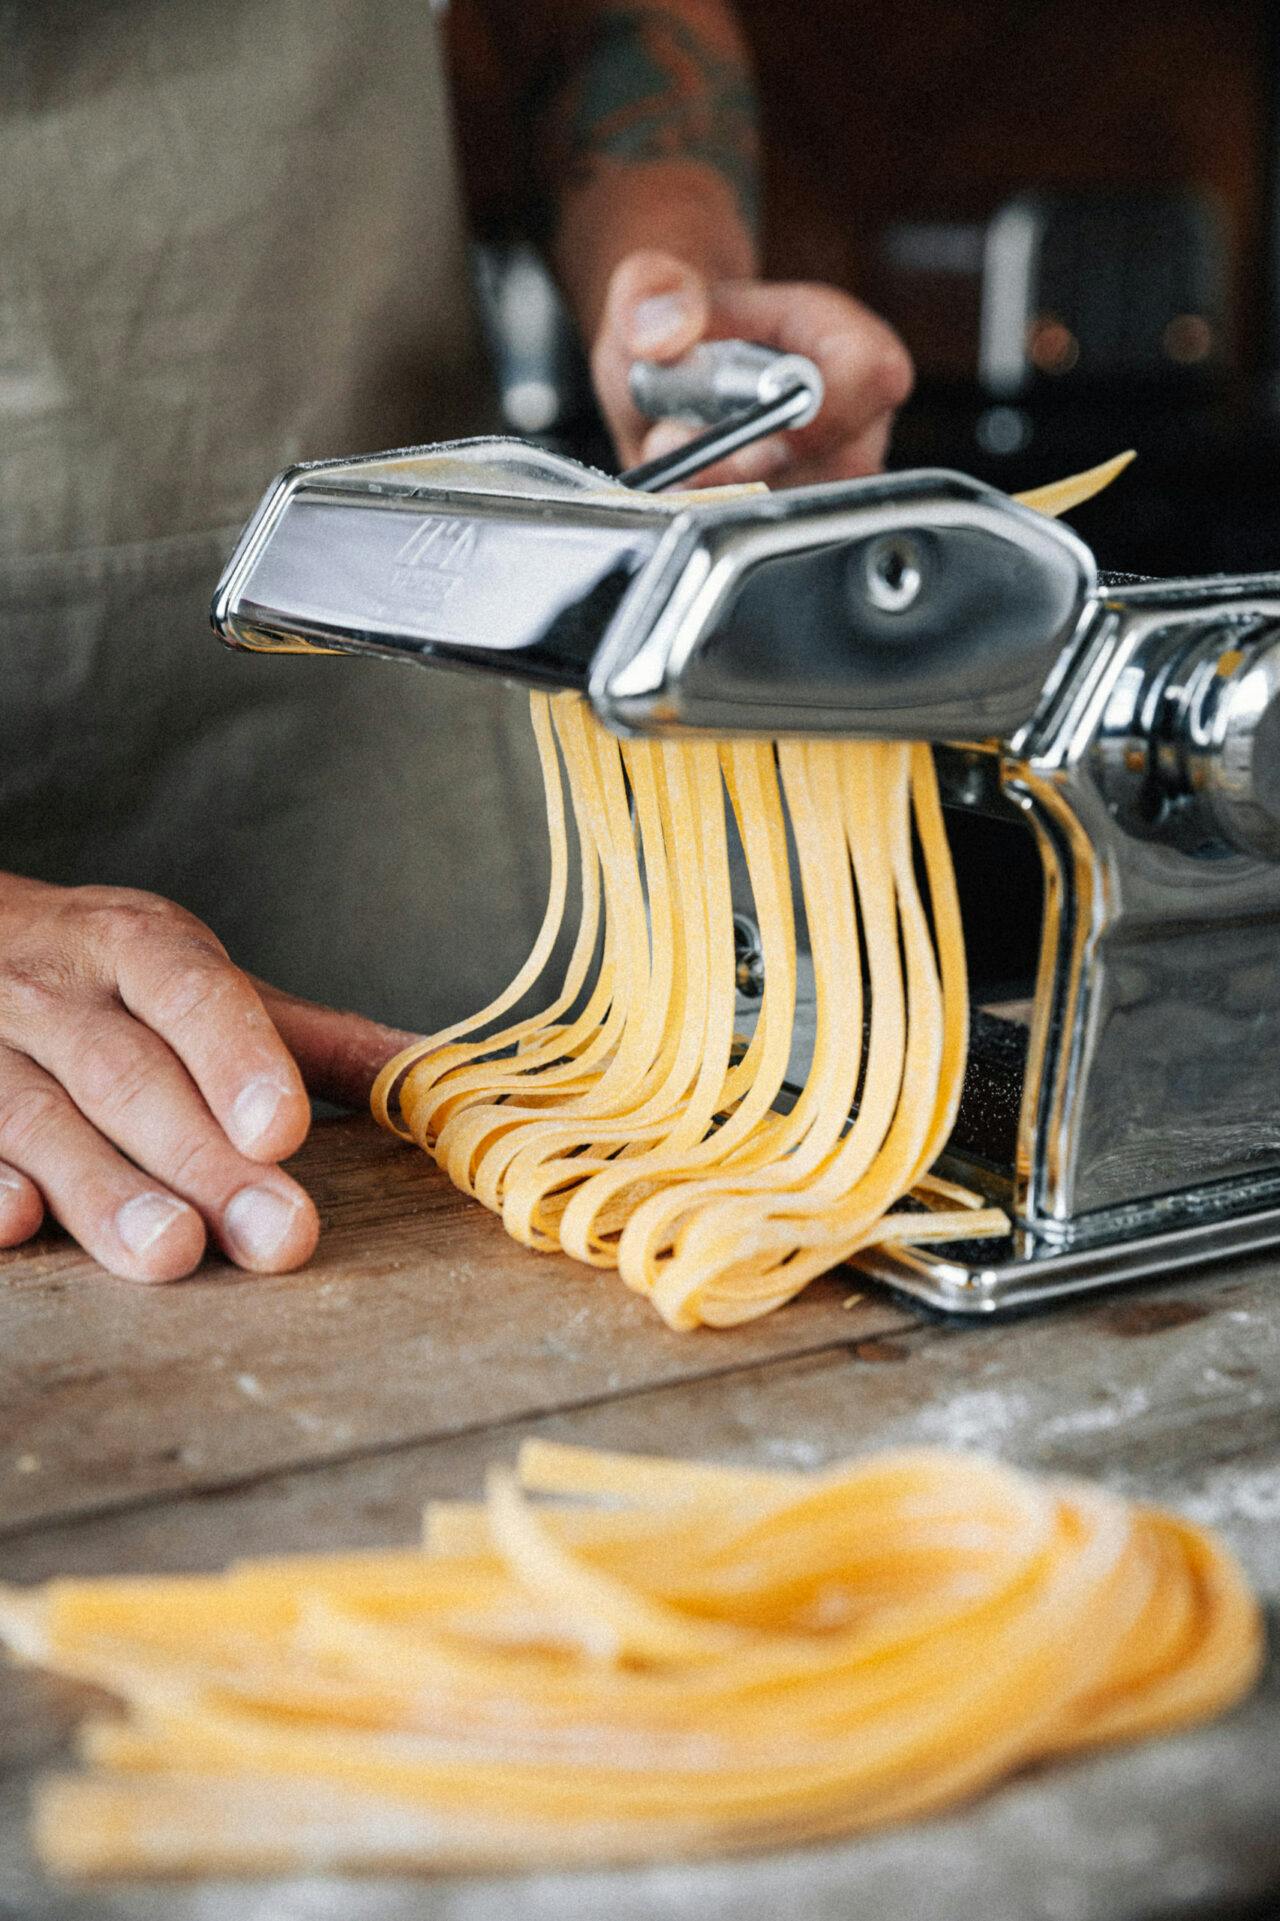 Cutting pasta with machine